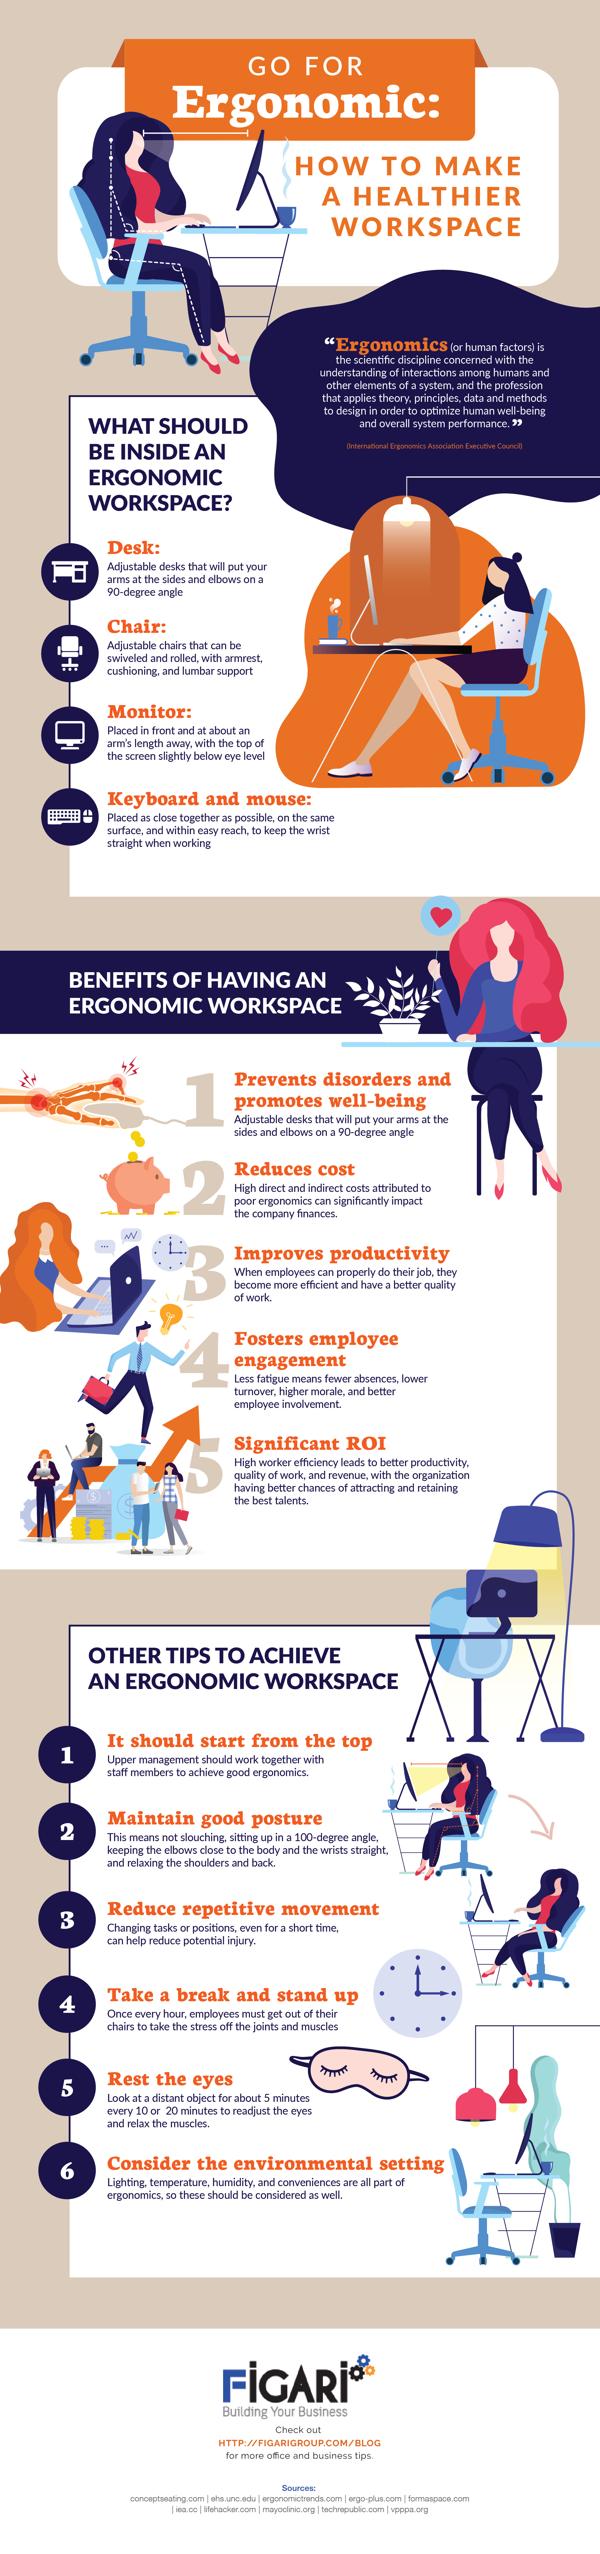 Go Ergonomic - How to Make Healthier Work Space 1